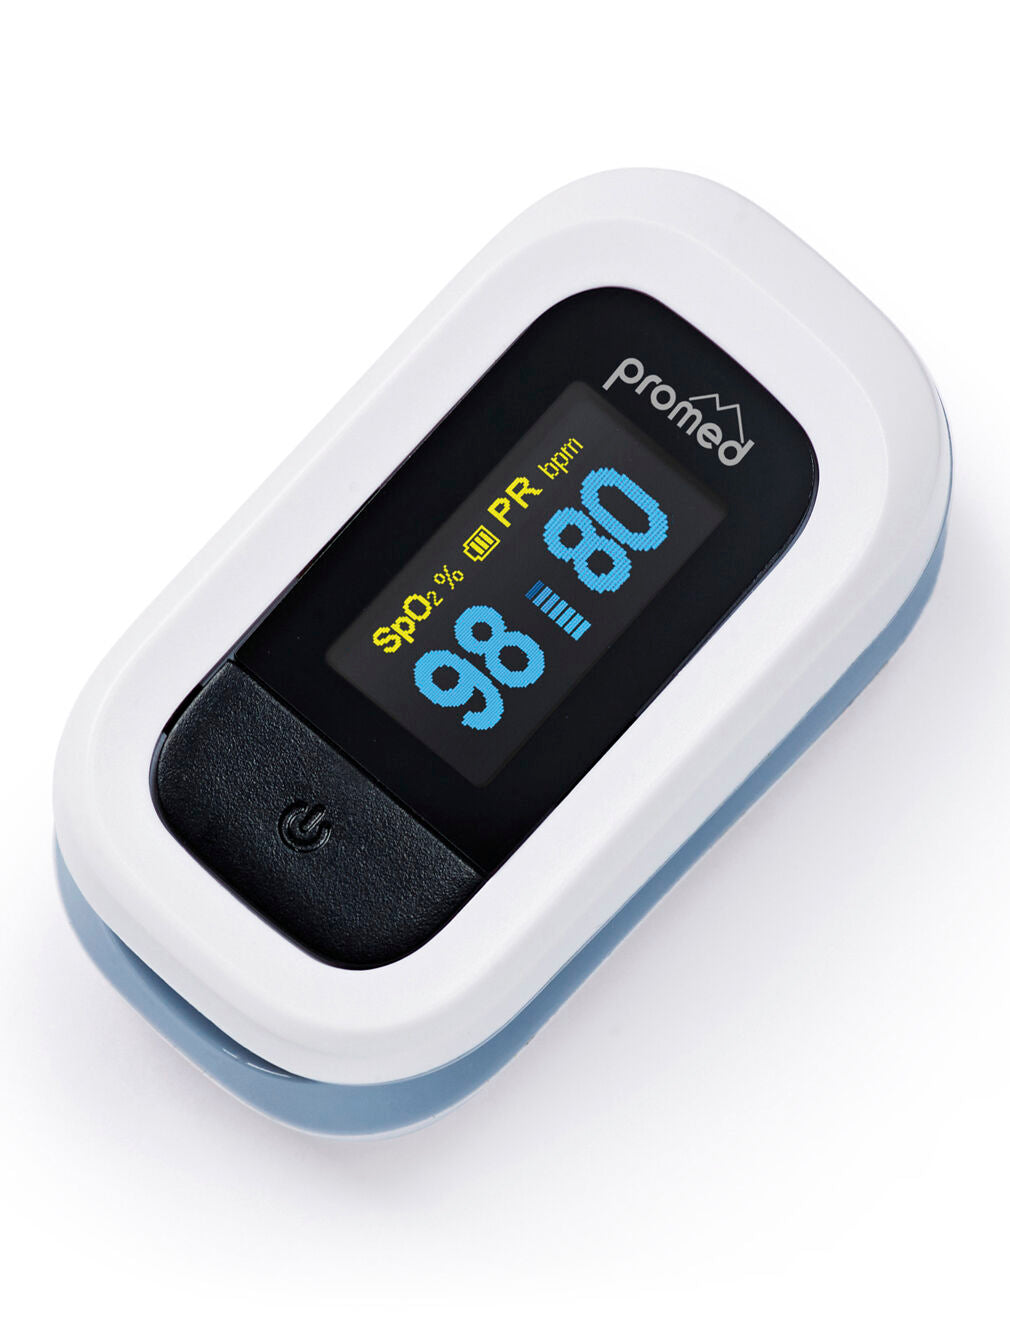 Pulsoximeter PM-200 Pro